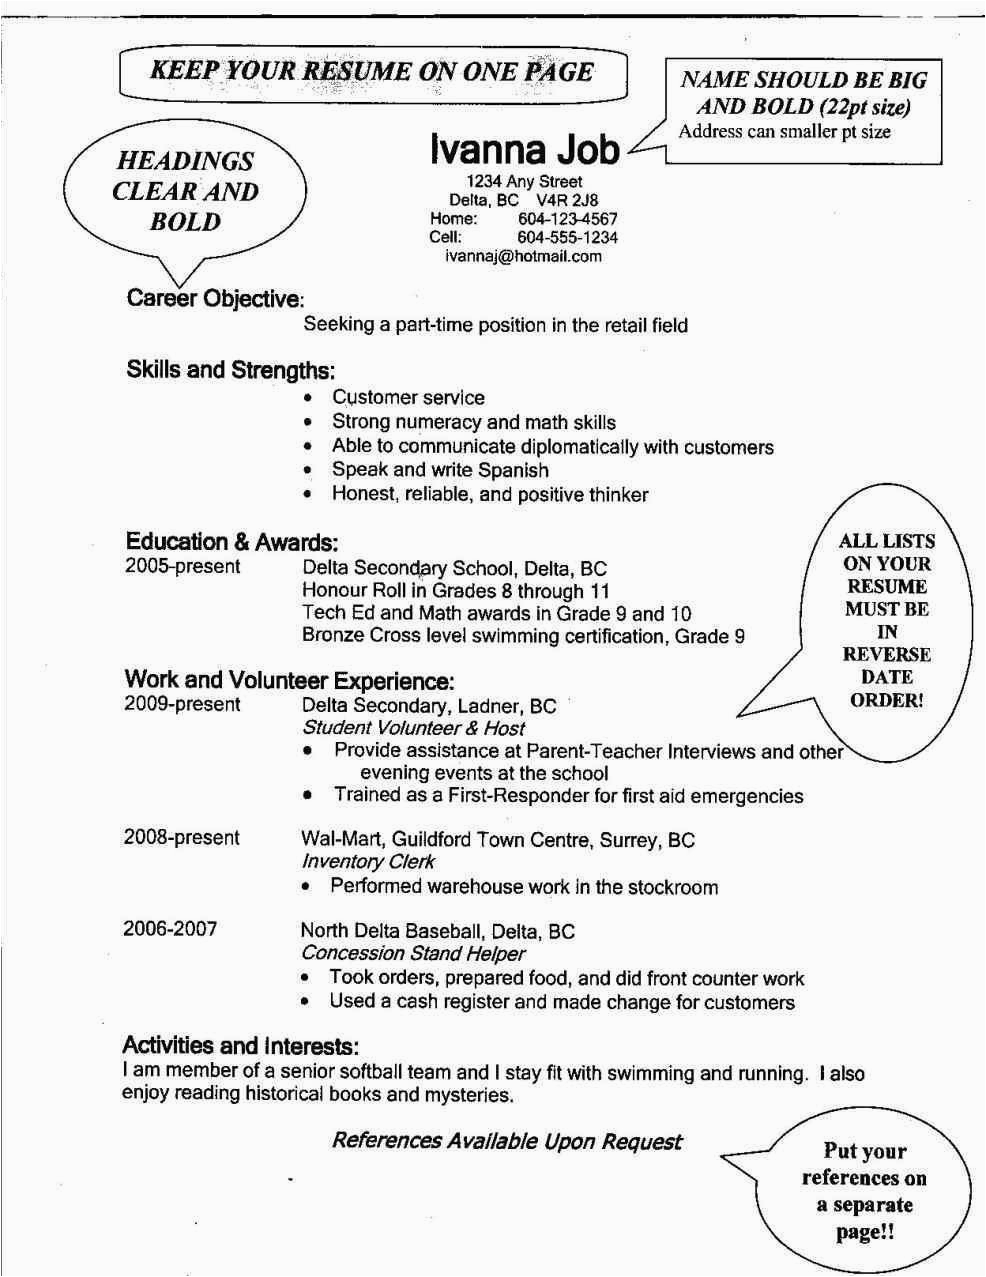 Sample Resume for College Scholarship Application 9 10 Resume Template Design Scholarship